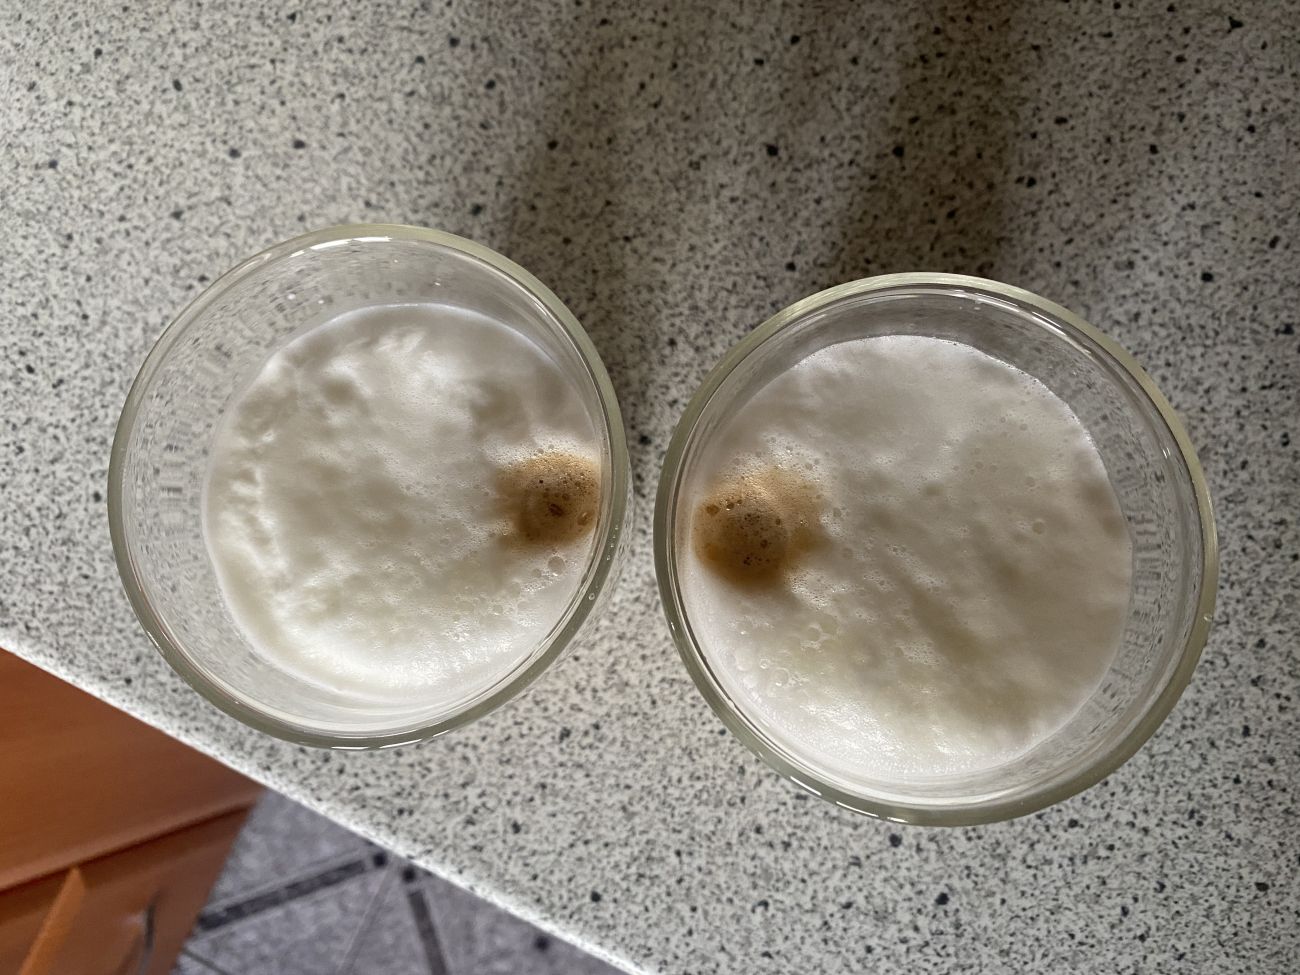 Melitta LatteSelect F63/0-201 2 zaparzone latte macchiato - pianka